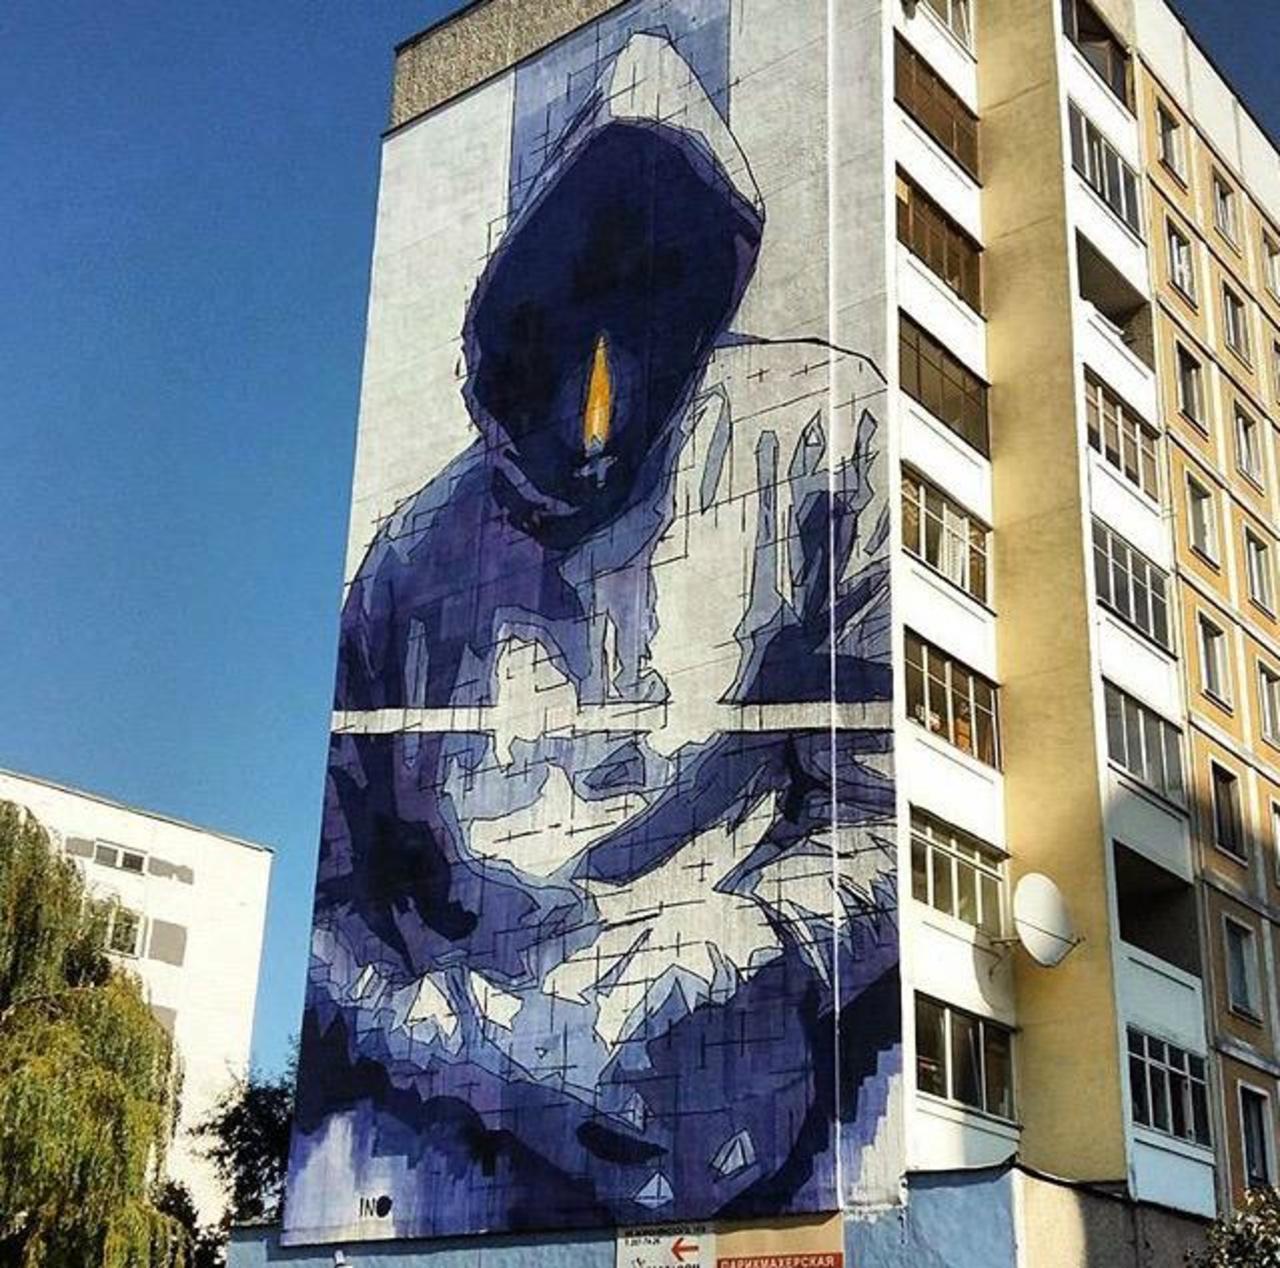 'Man With No Name' 
New Street Art by iNO in Minsk, Belarus 

#art #graffiti #mural #streetart http://t.co/xp3aVADqVf